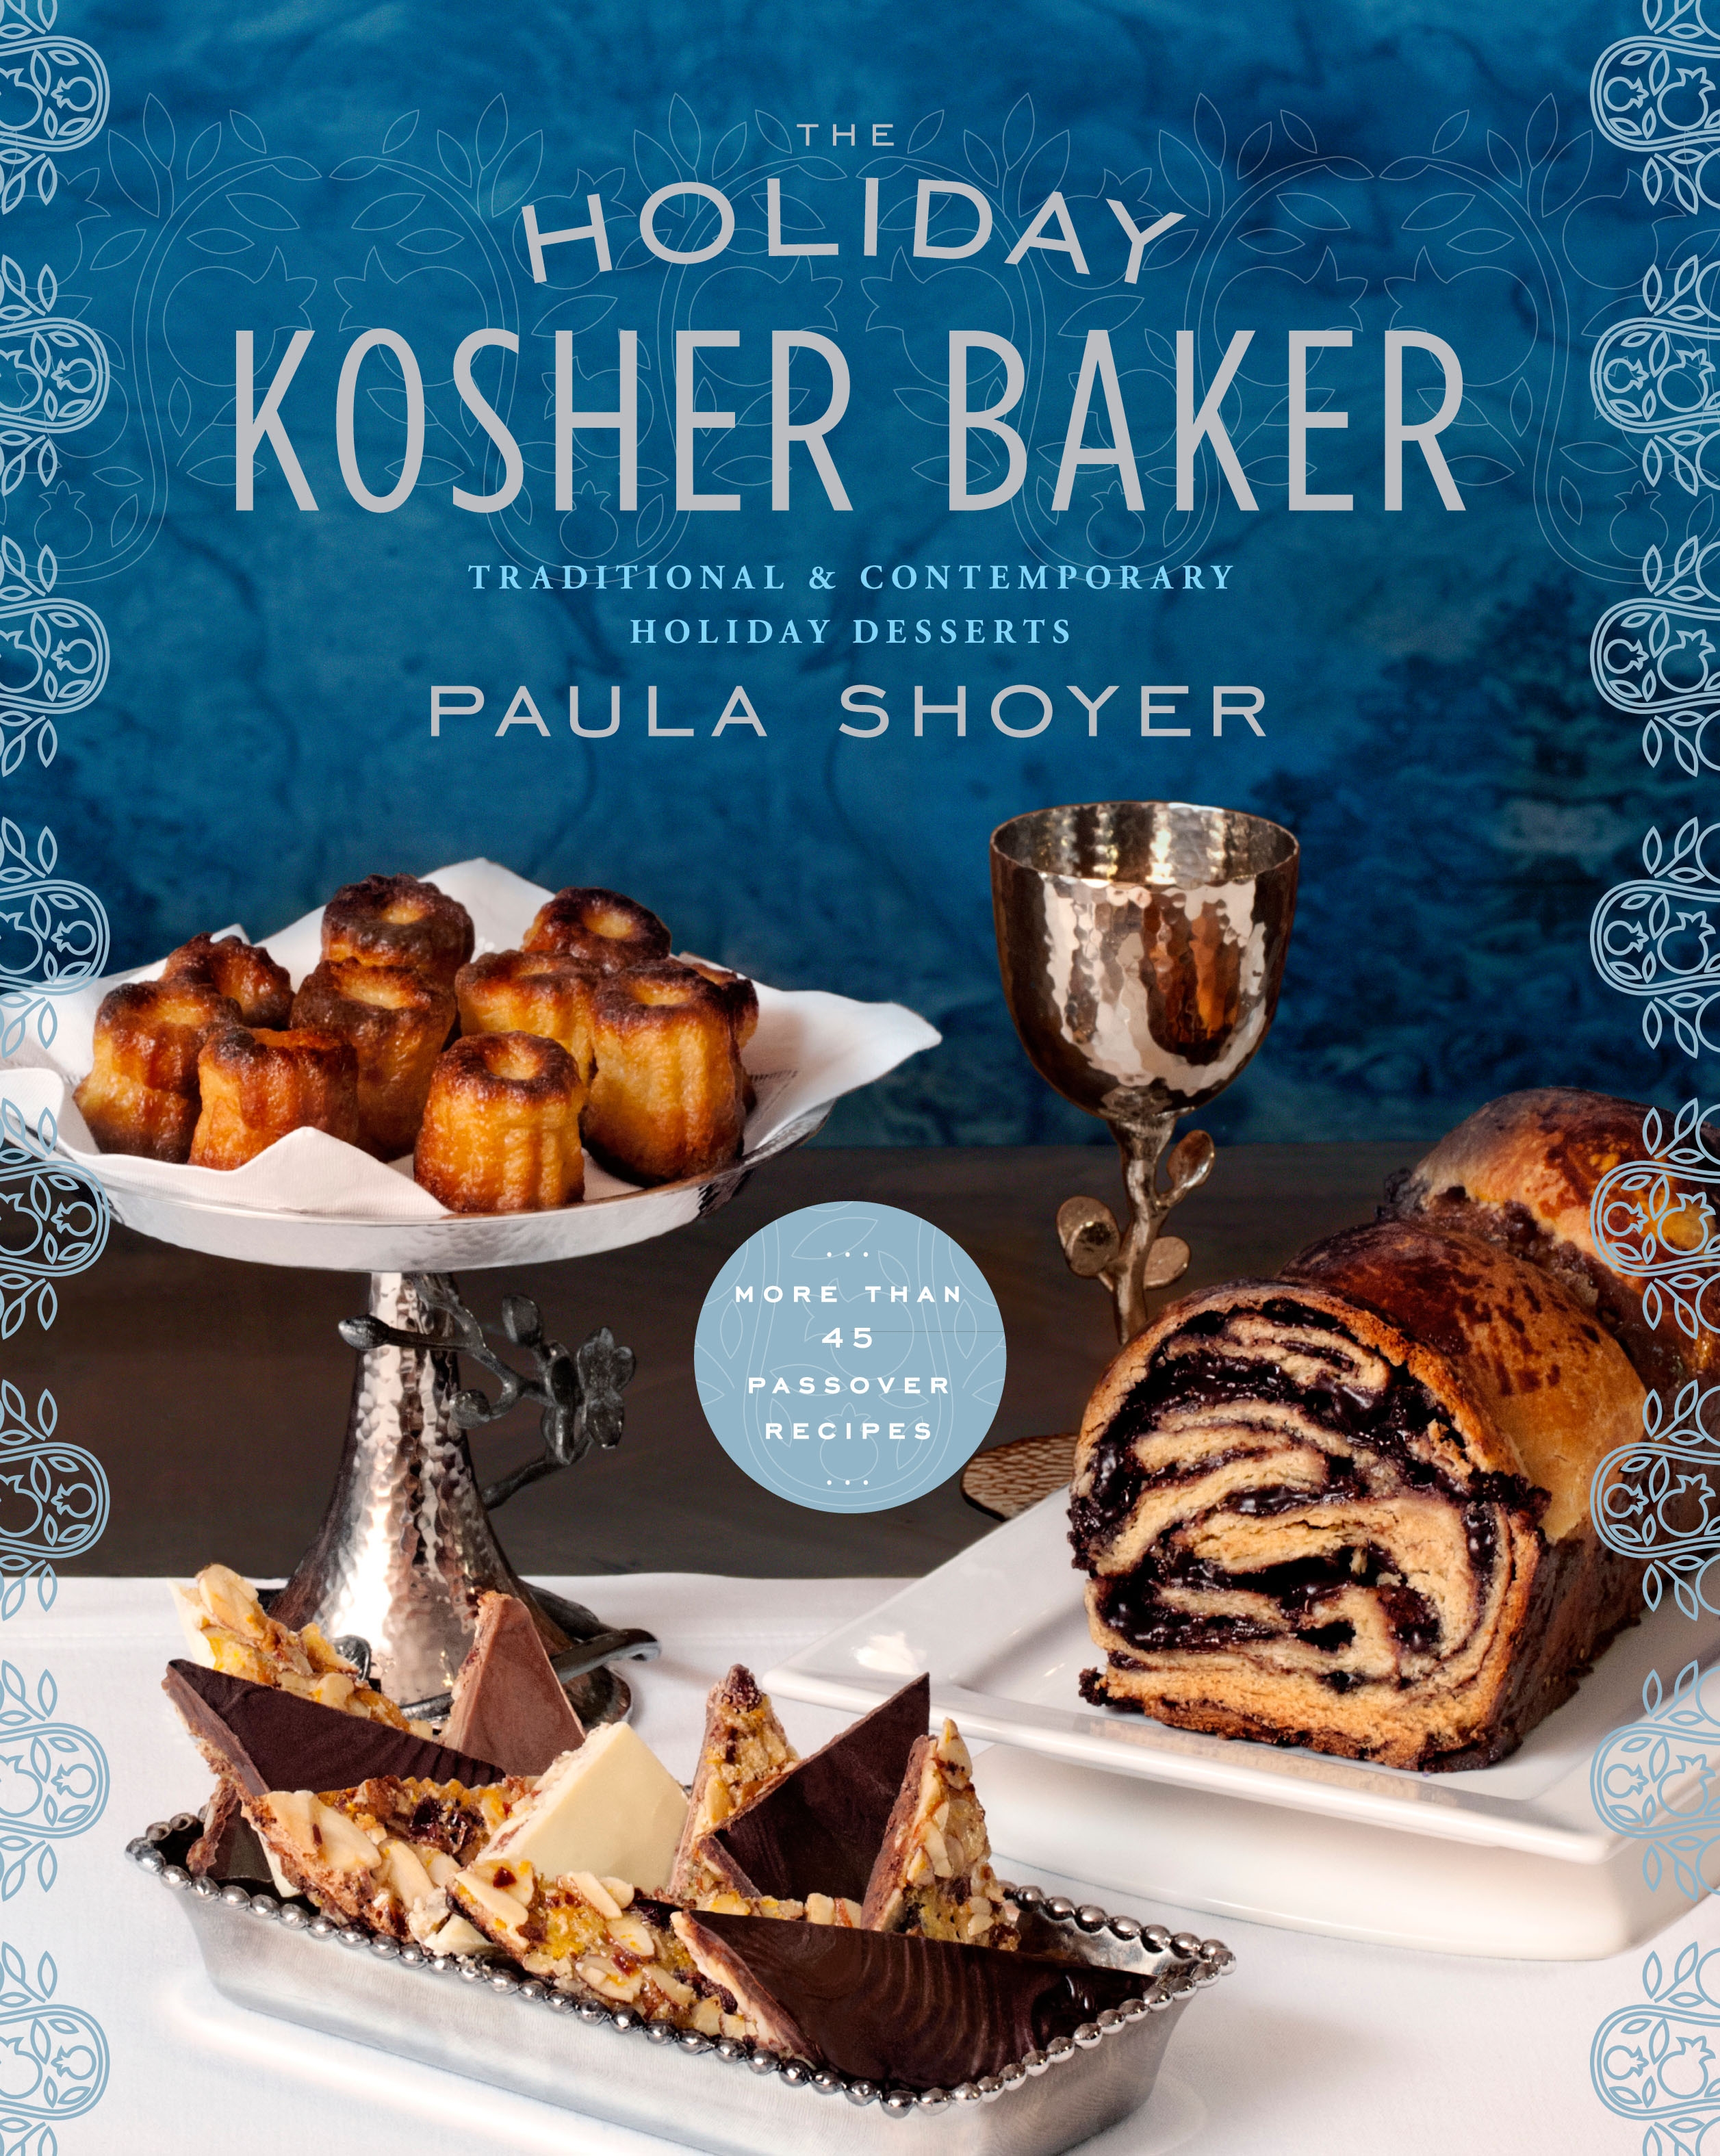 The Holiday Kosher Baker by Paula Shoyer